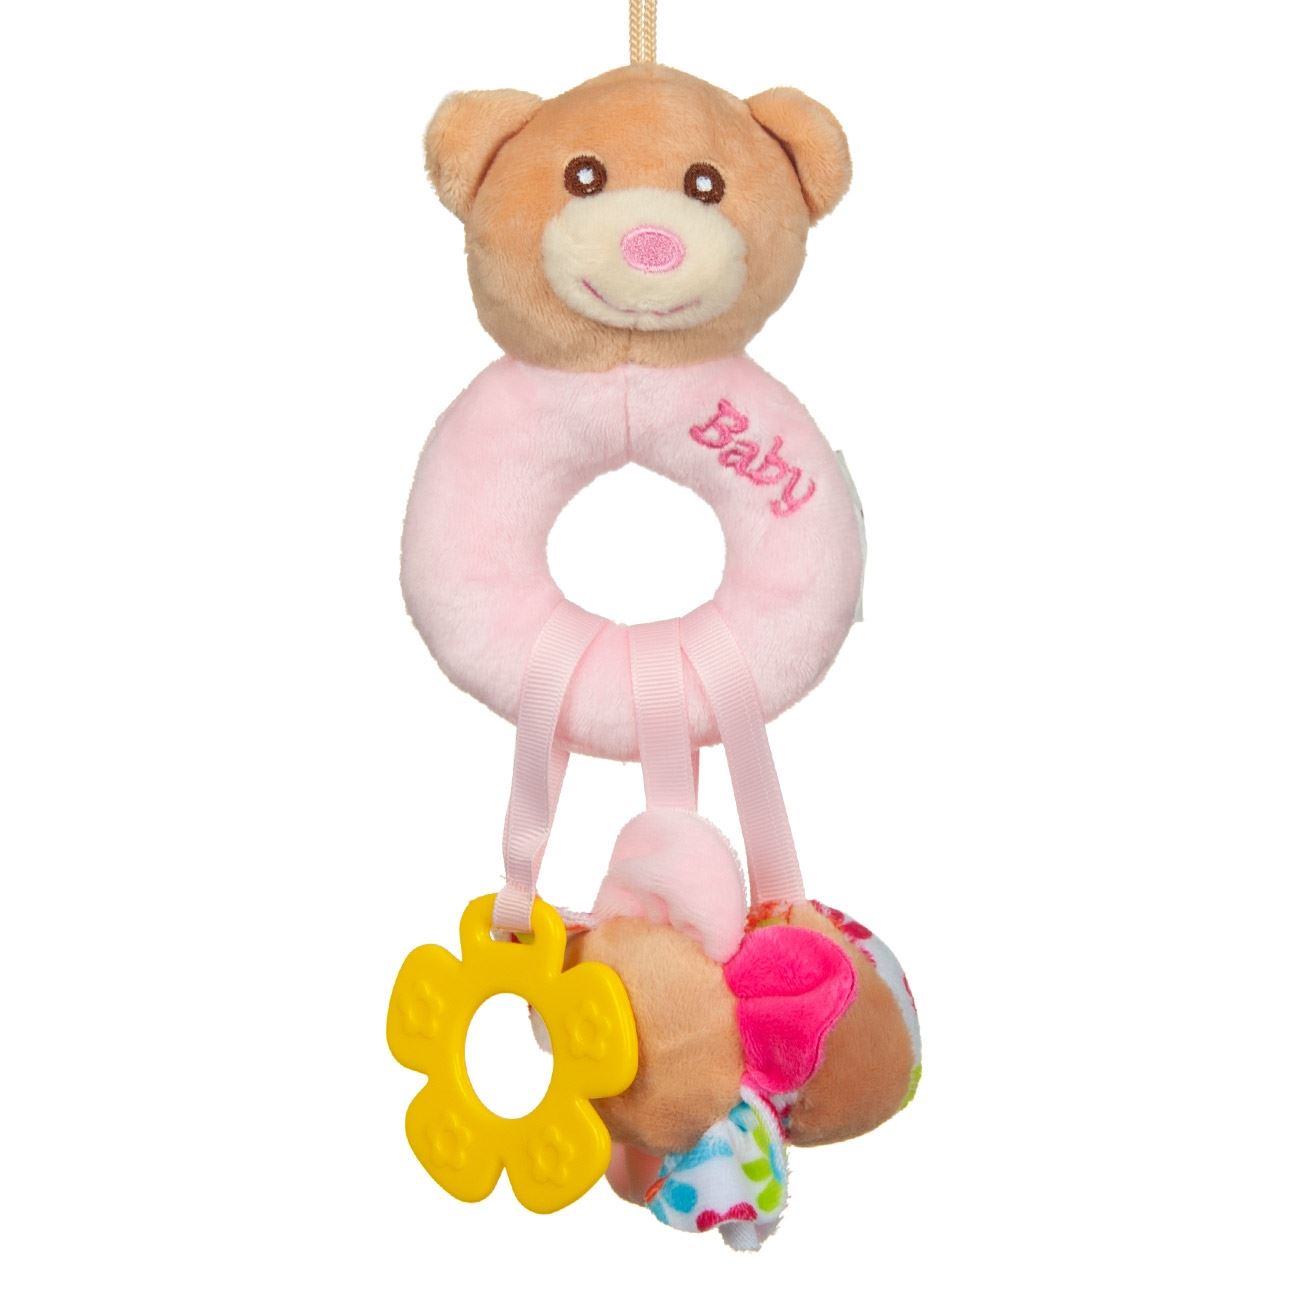 Teddy macis baba csörgő rózsaszín 25 cm